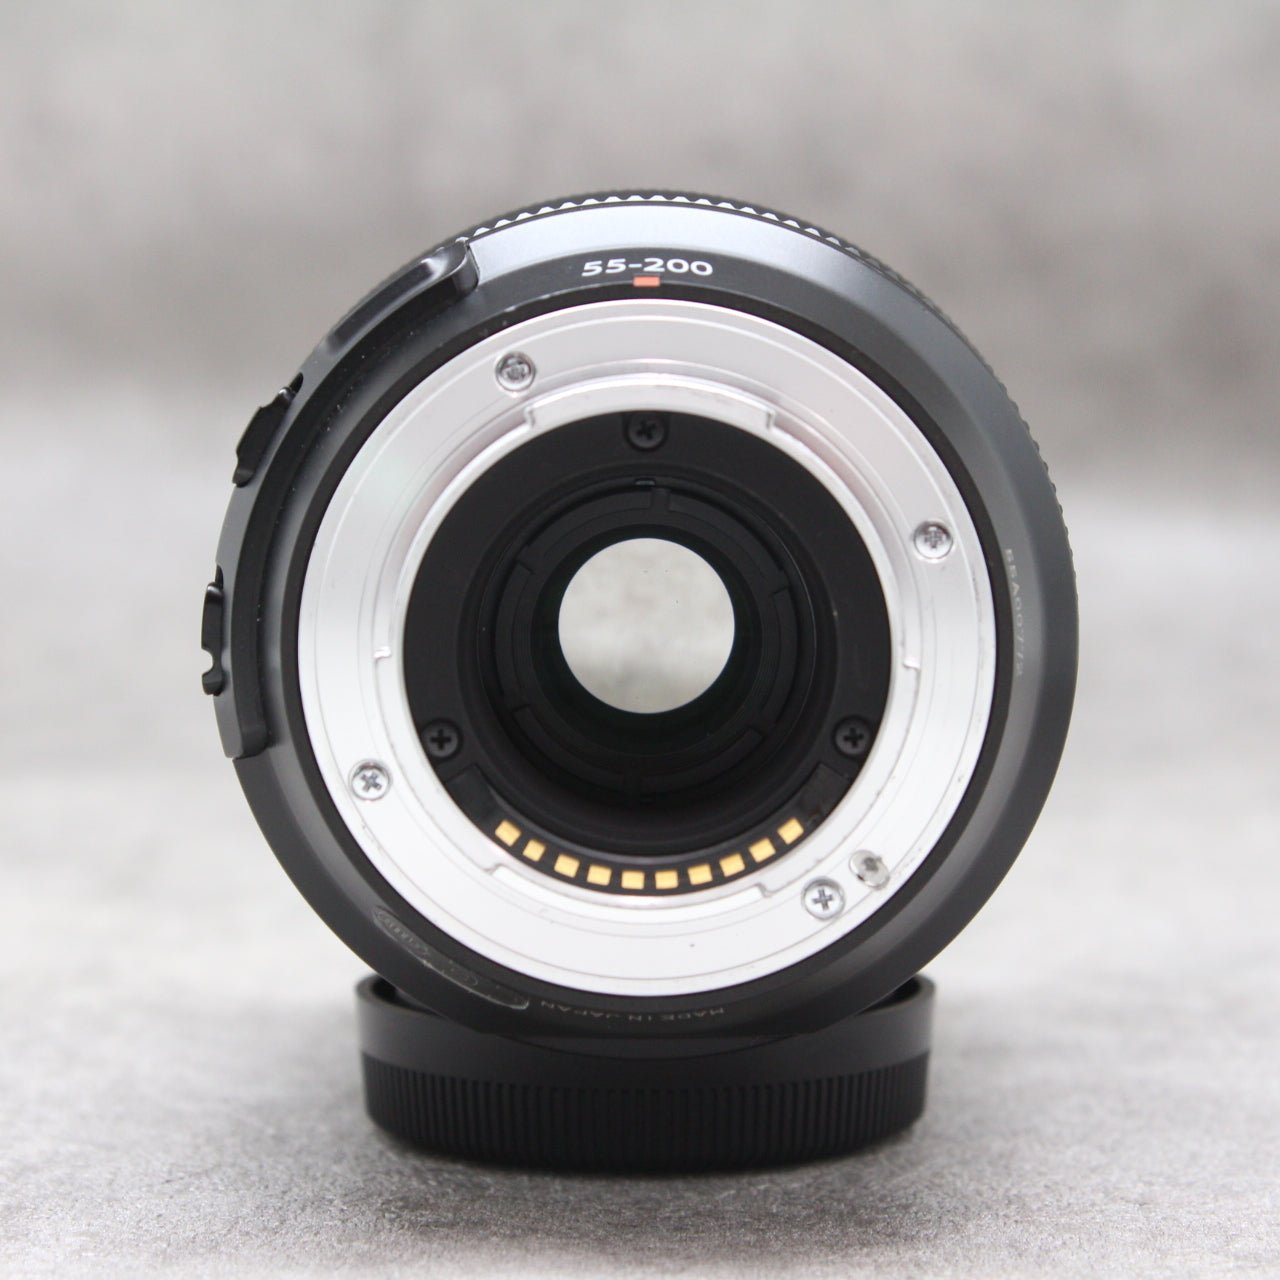 XF55-200mm レンズフィルター付き - レンズ(ズーム)